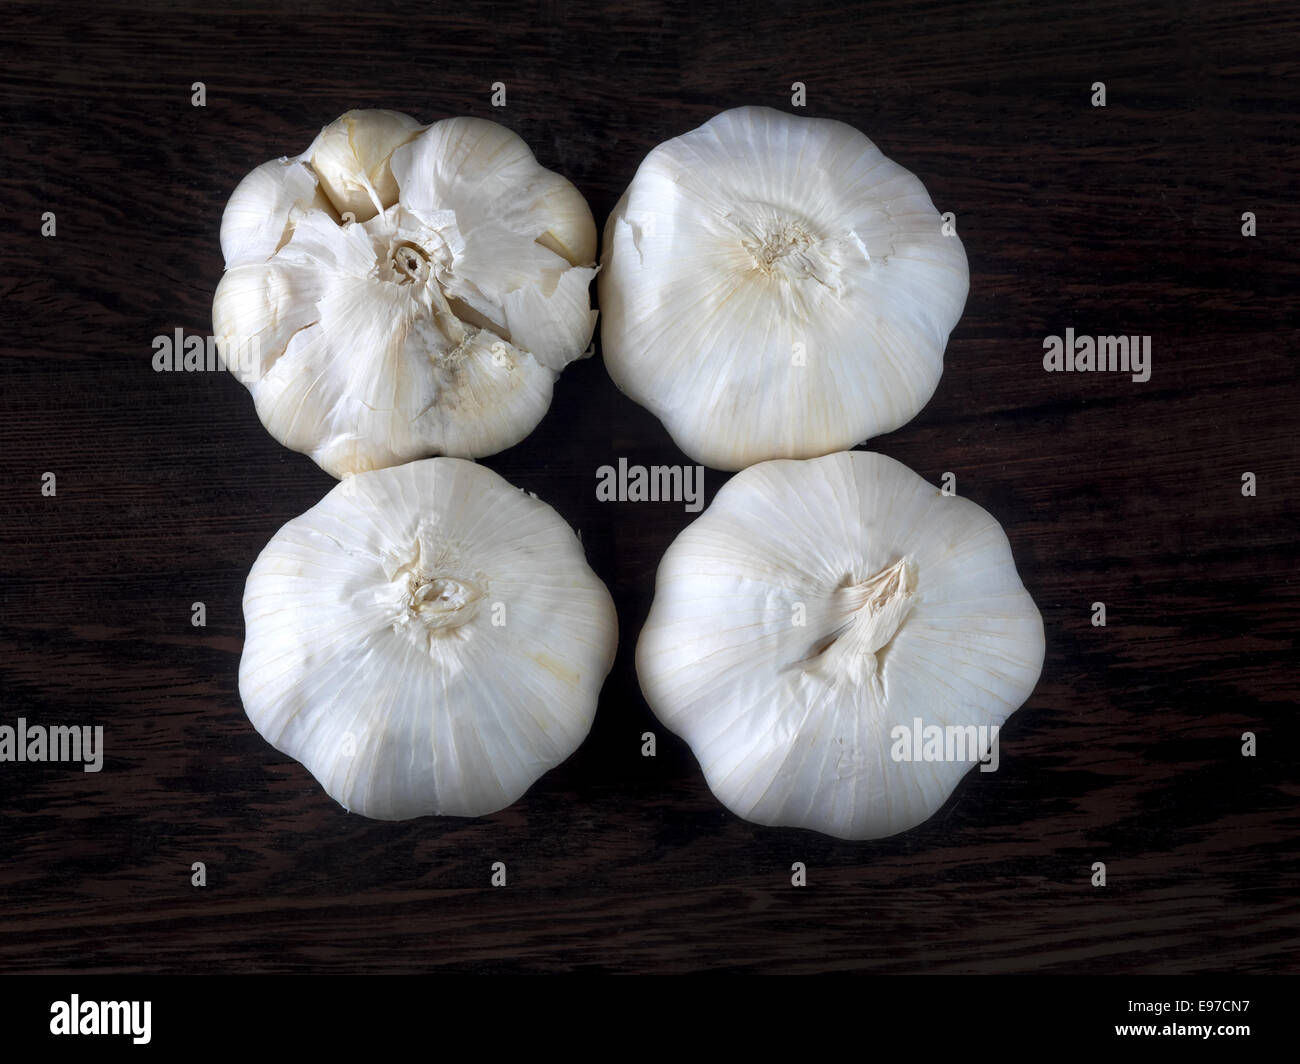 Four garlic bulbs on a dark background Stock Photo